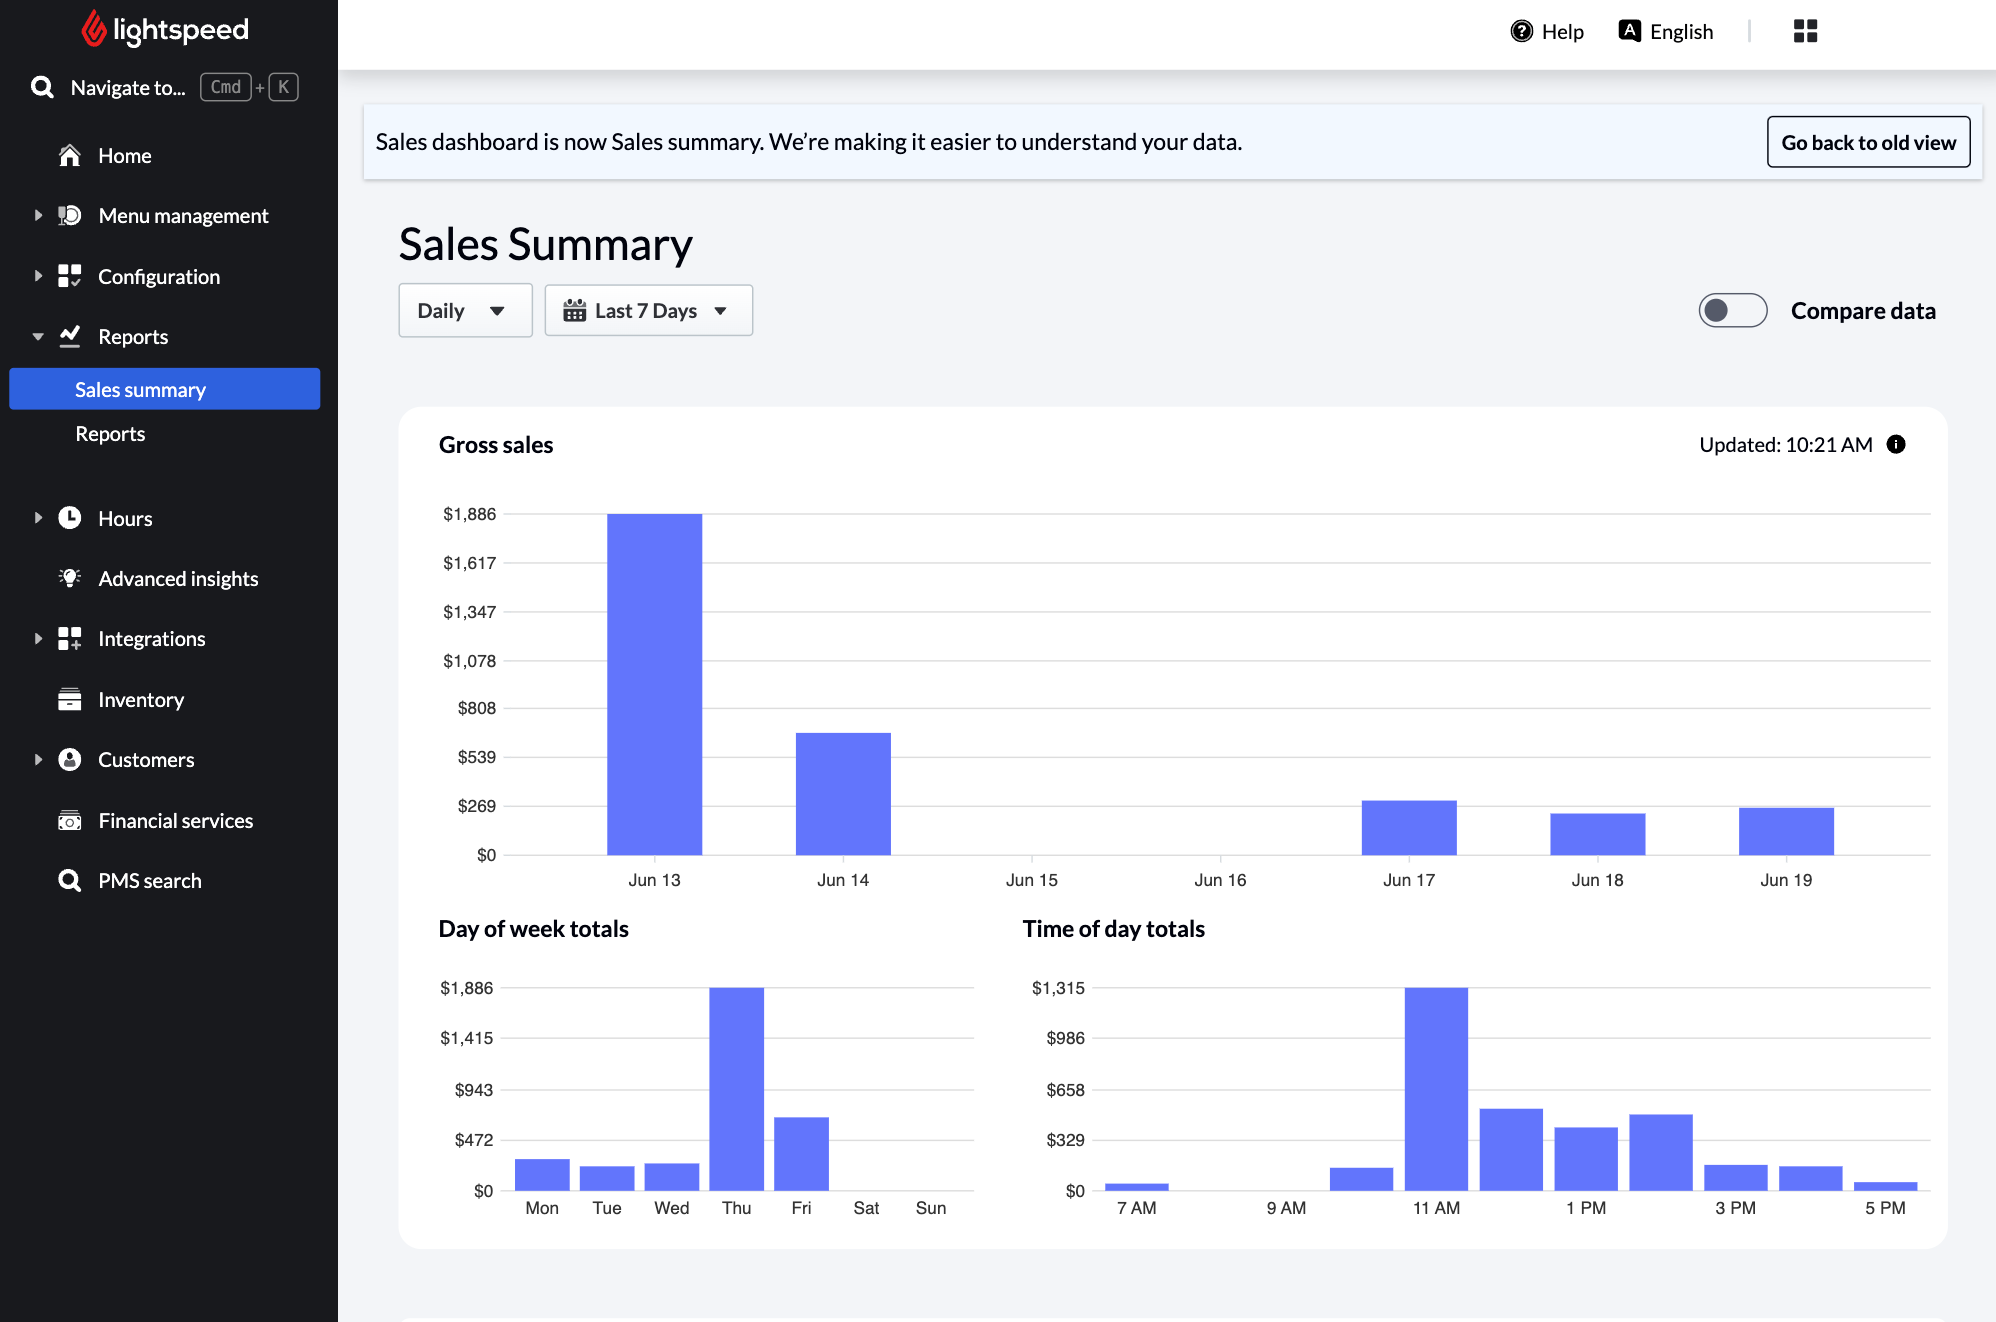 Sales Summary main page